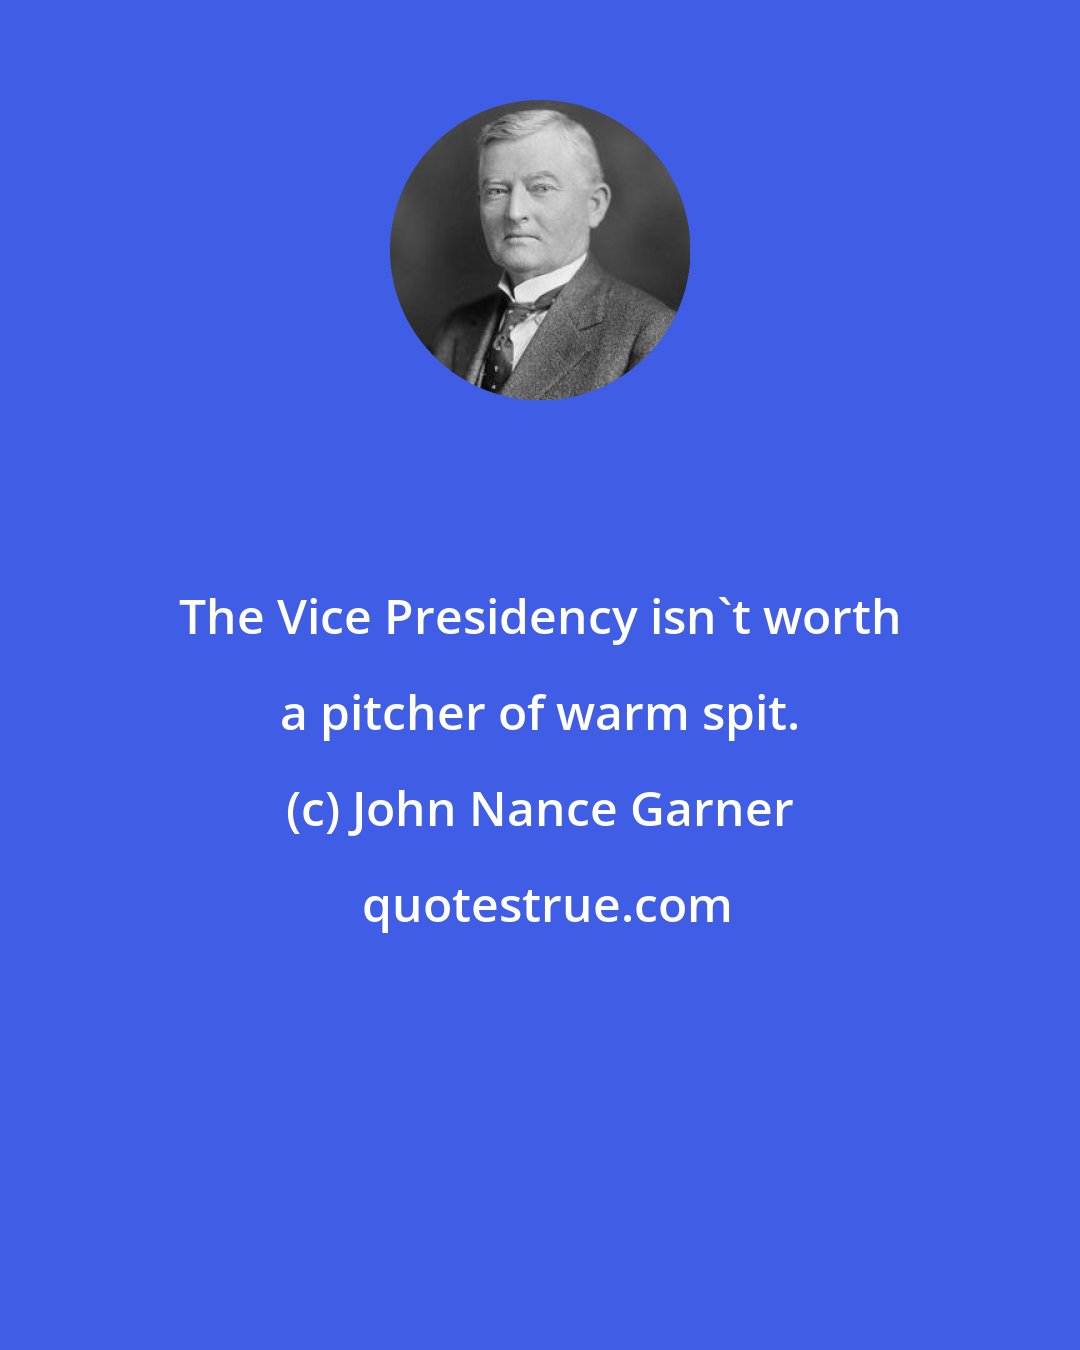 John Nance Garner: The Vice Presidency isn't worth a pitcher of warm spit.